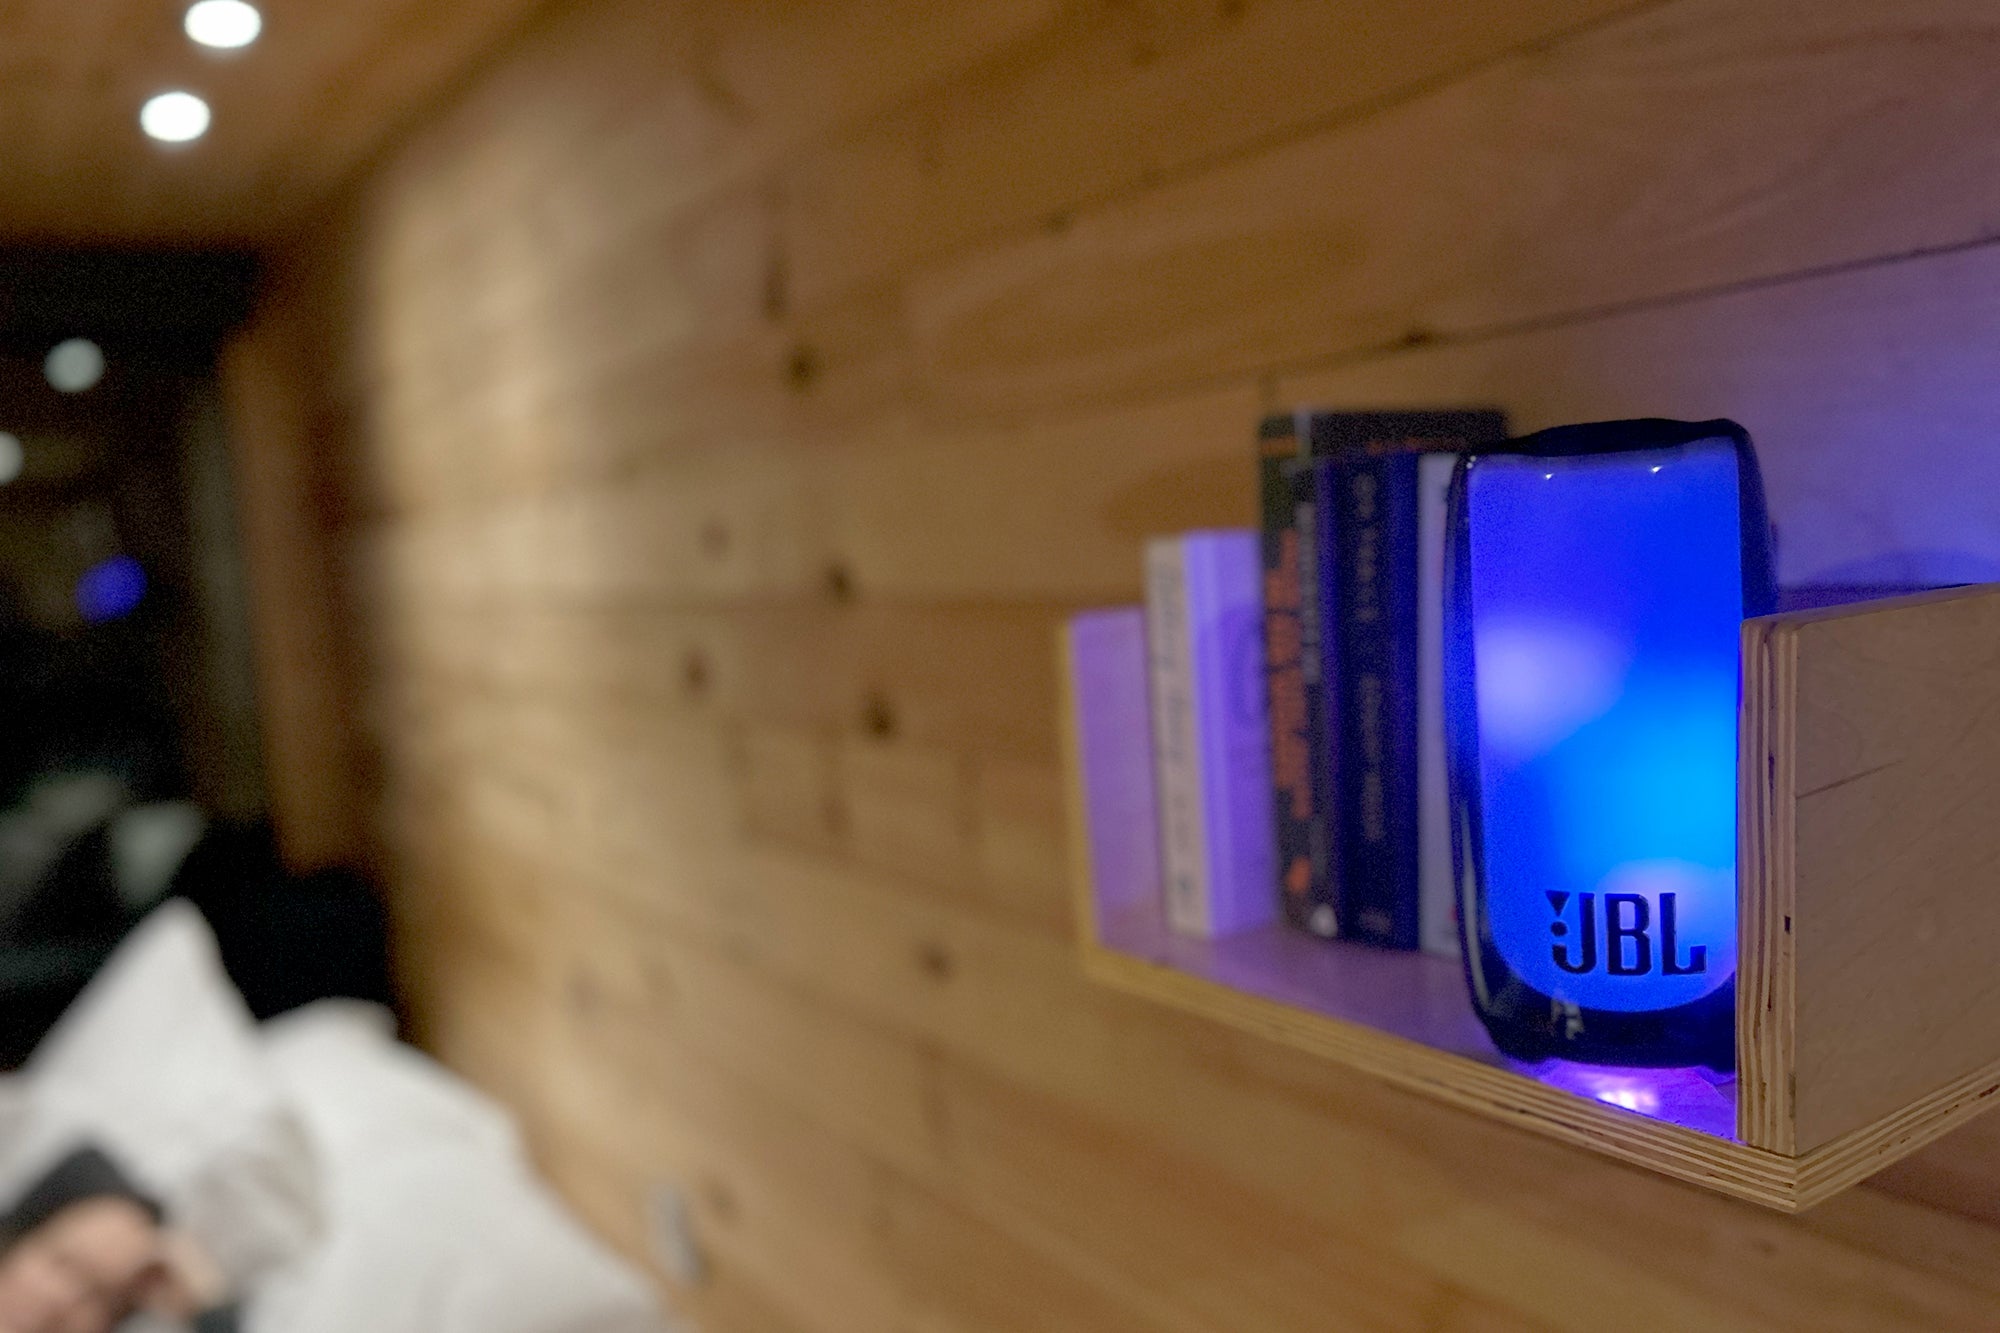 JBL Pulse 5 Bluetooth speaker pulsing blue in a getaway cabin